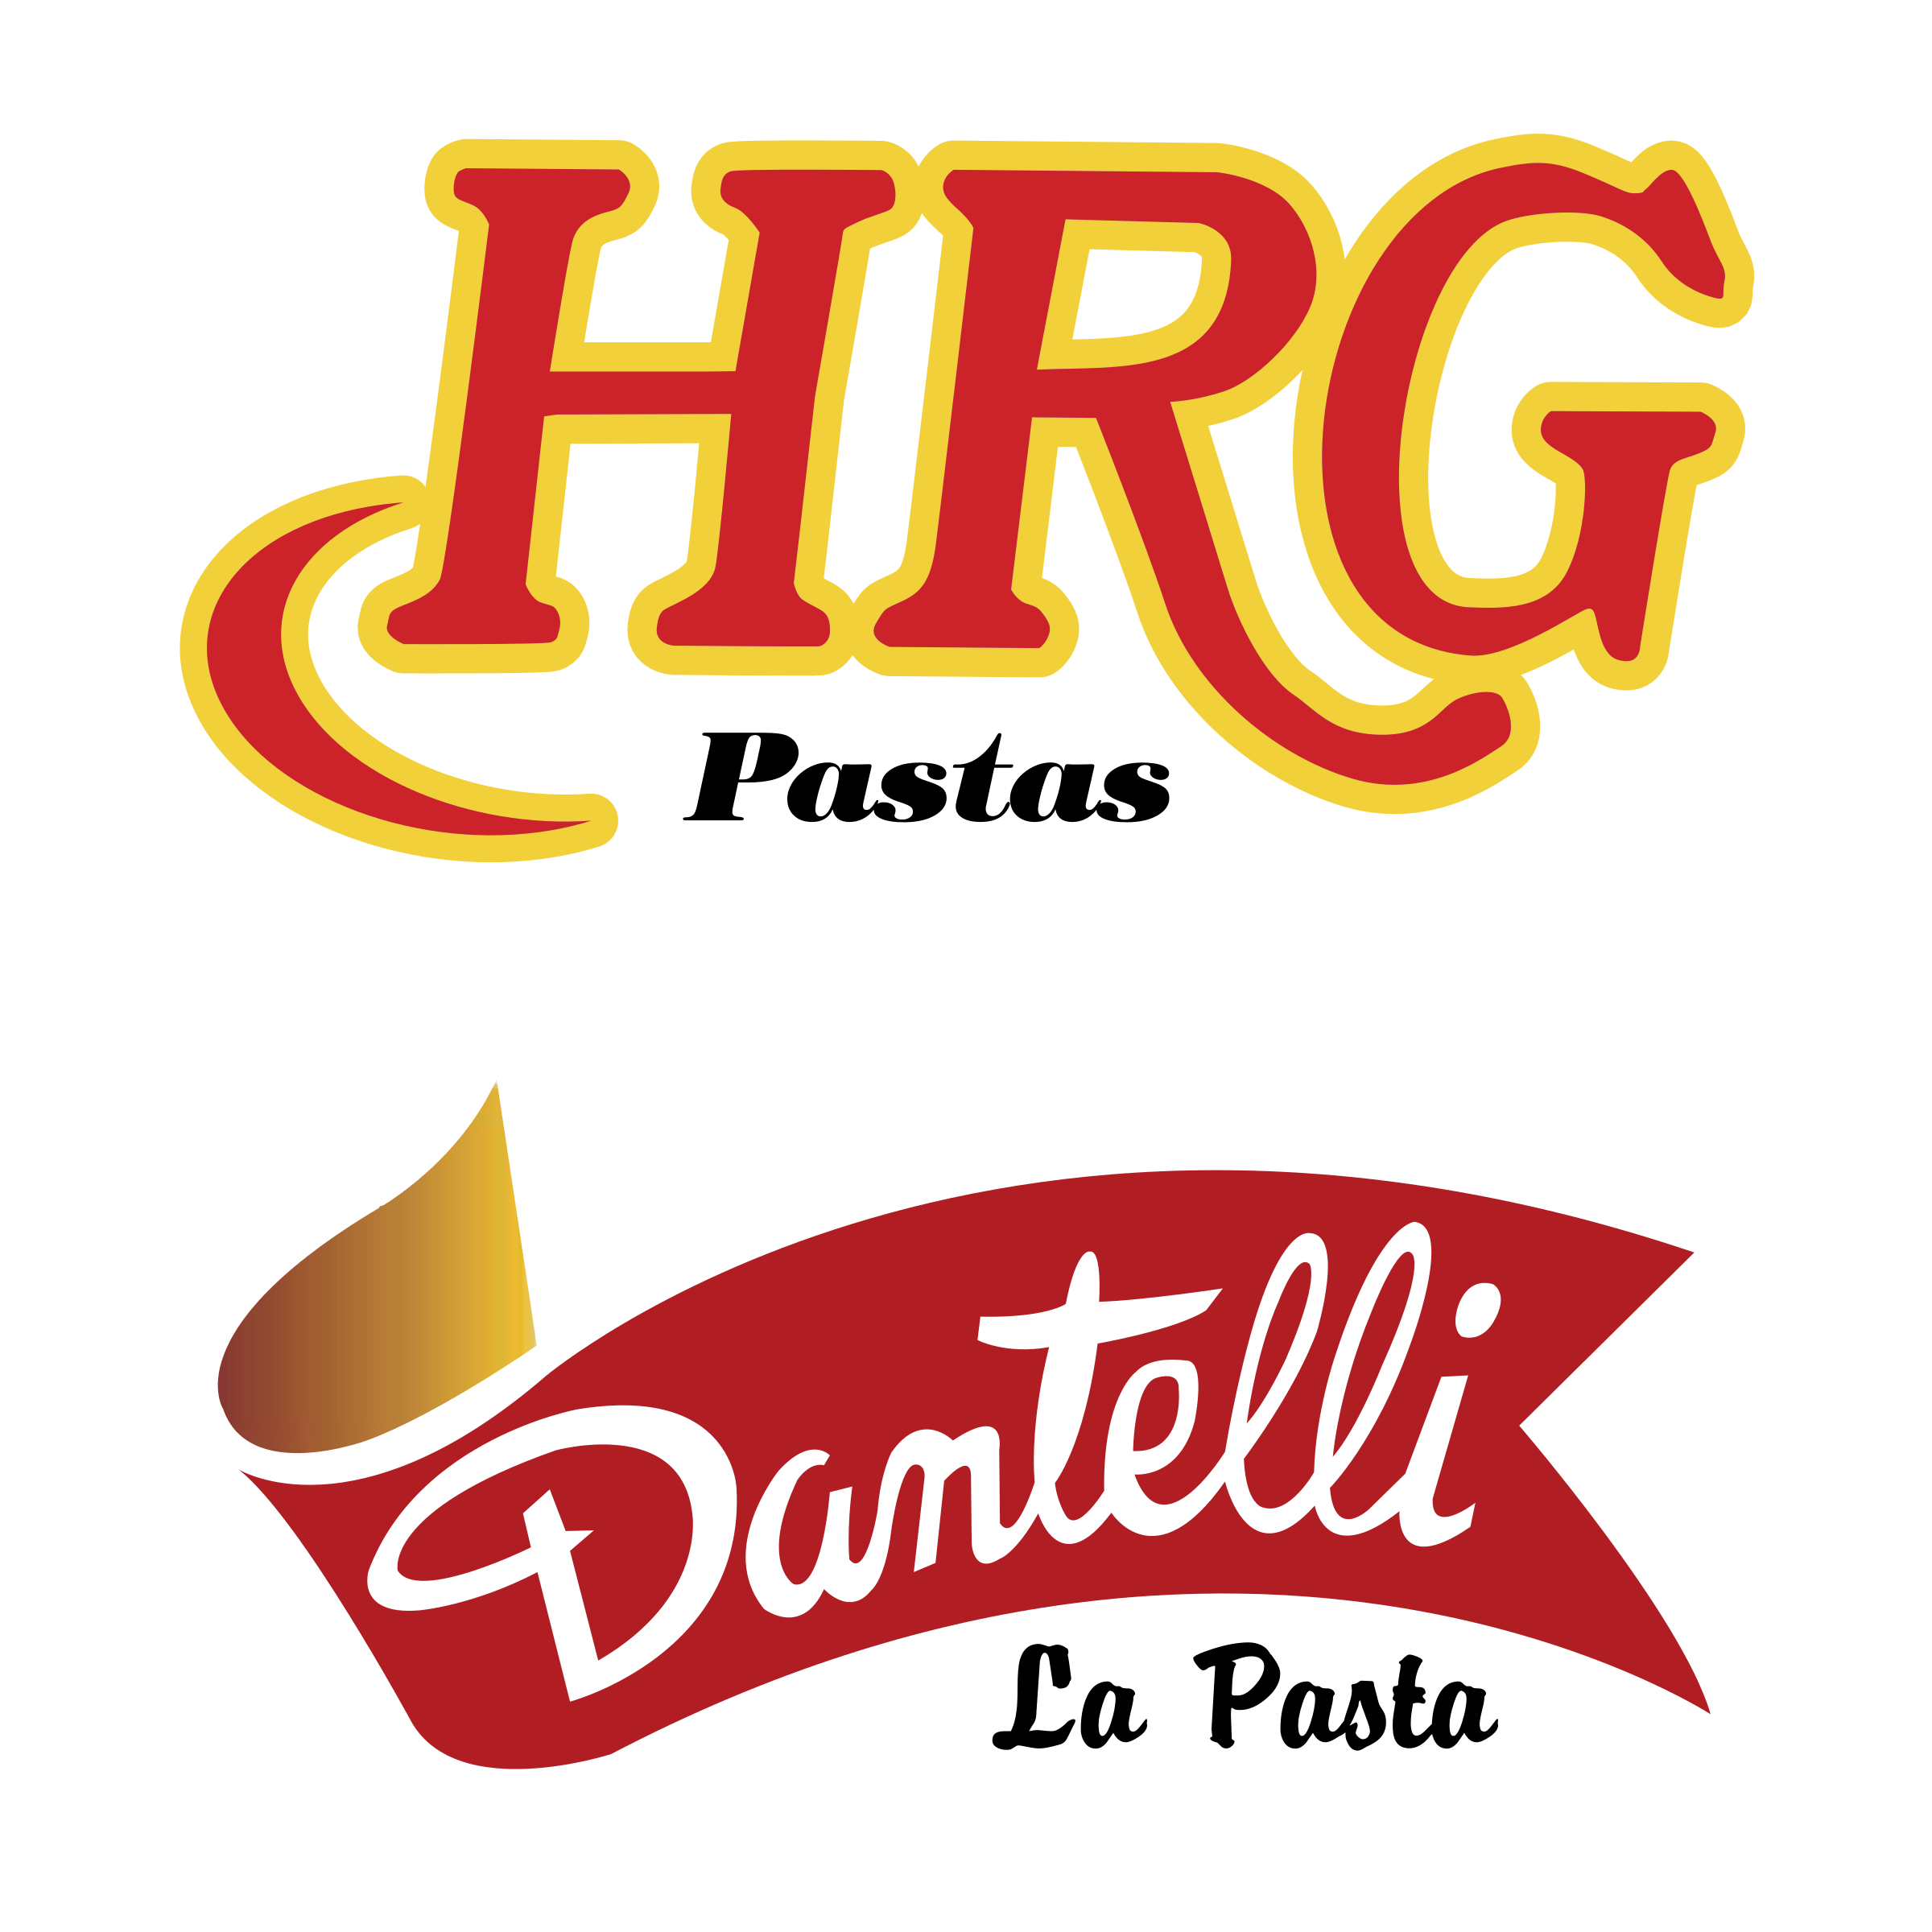 HRG Logo - HRG Pastas Logo PNG Transparent & SVG Vector - Freebie Supply